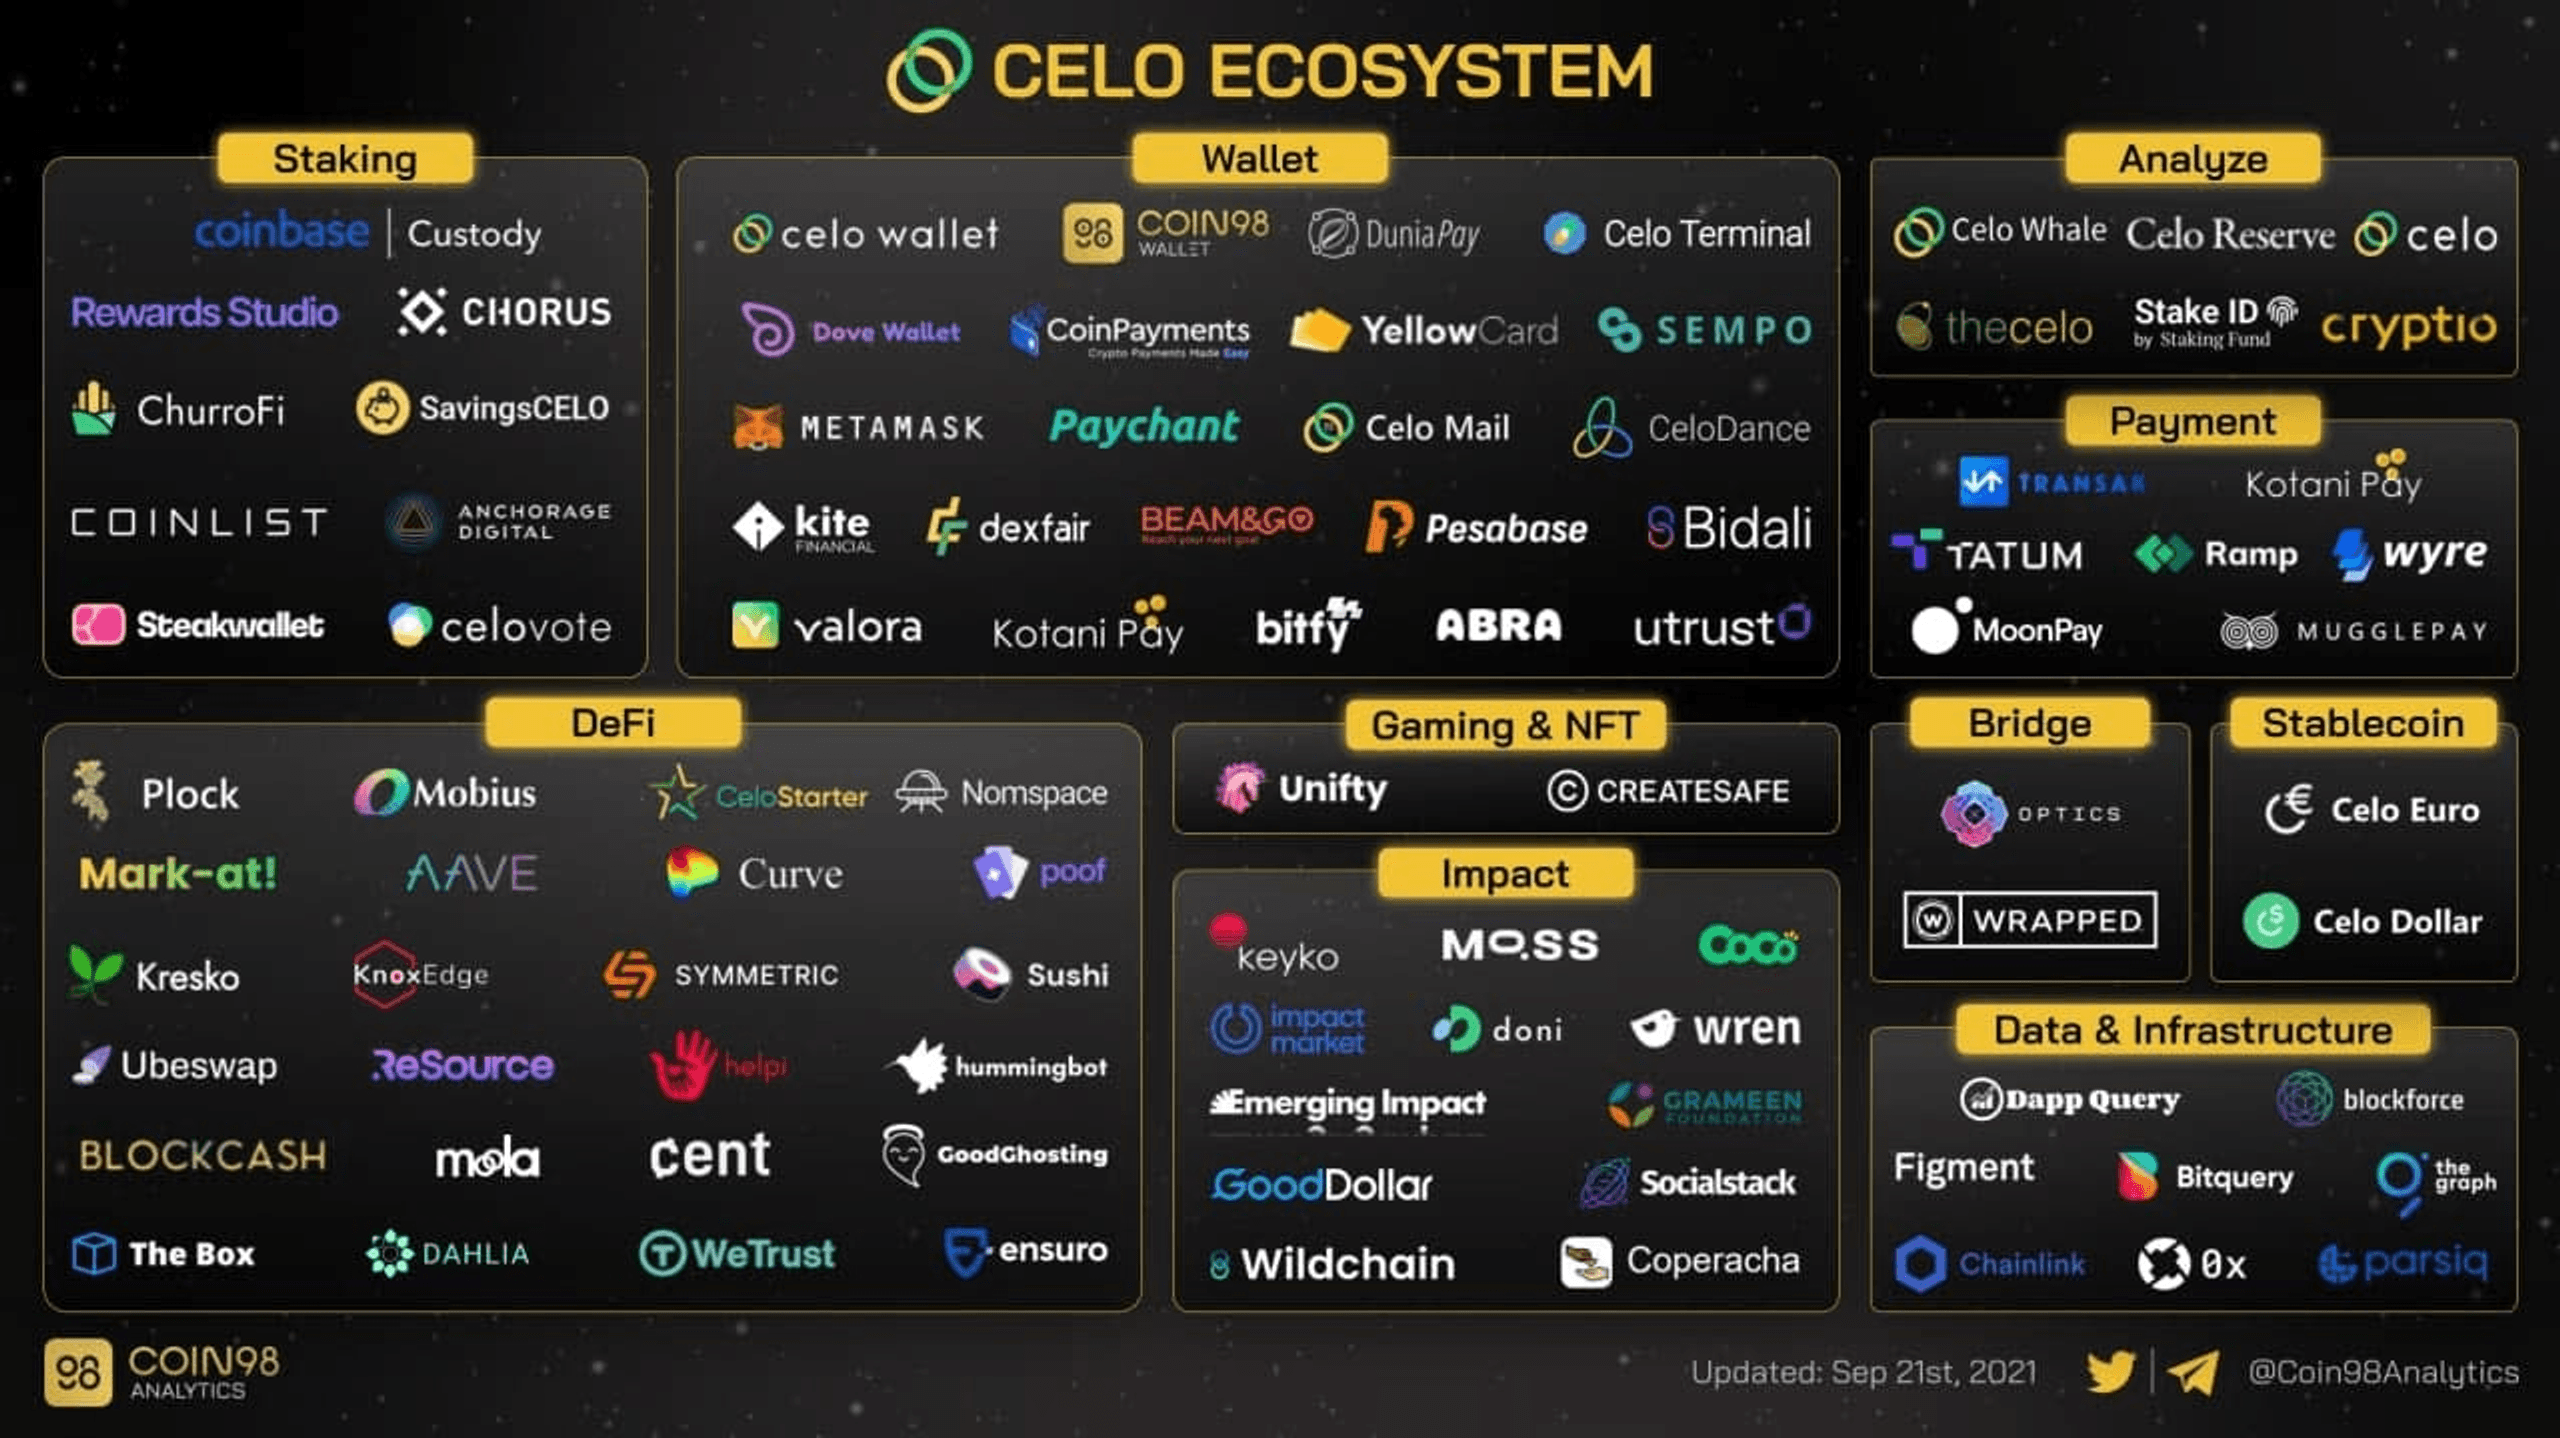 celo ecosystem overview